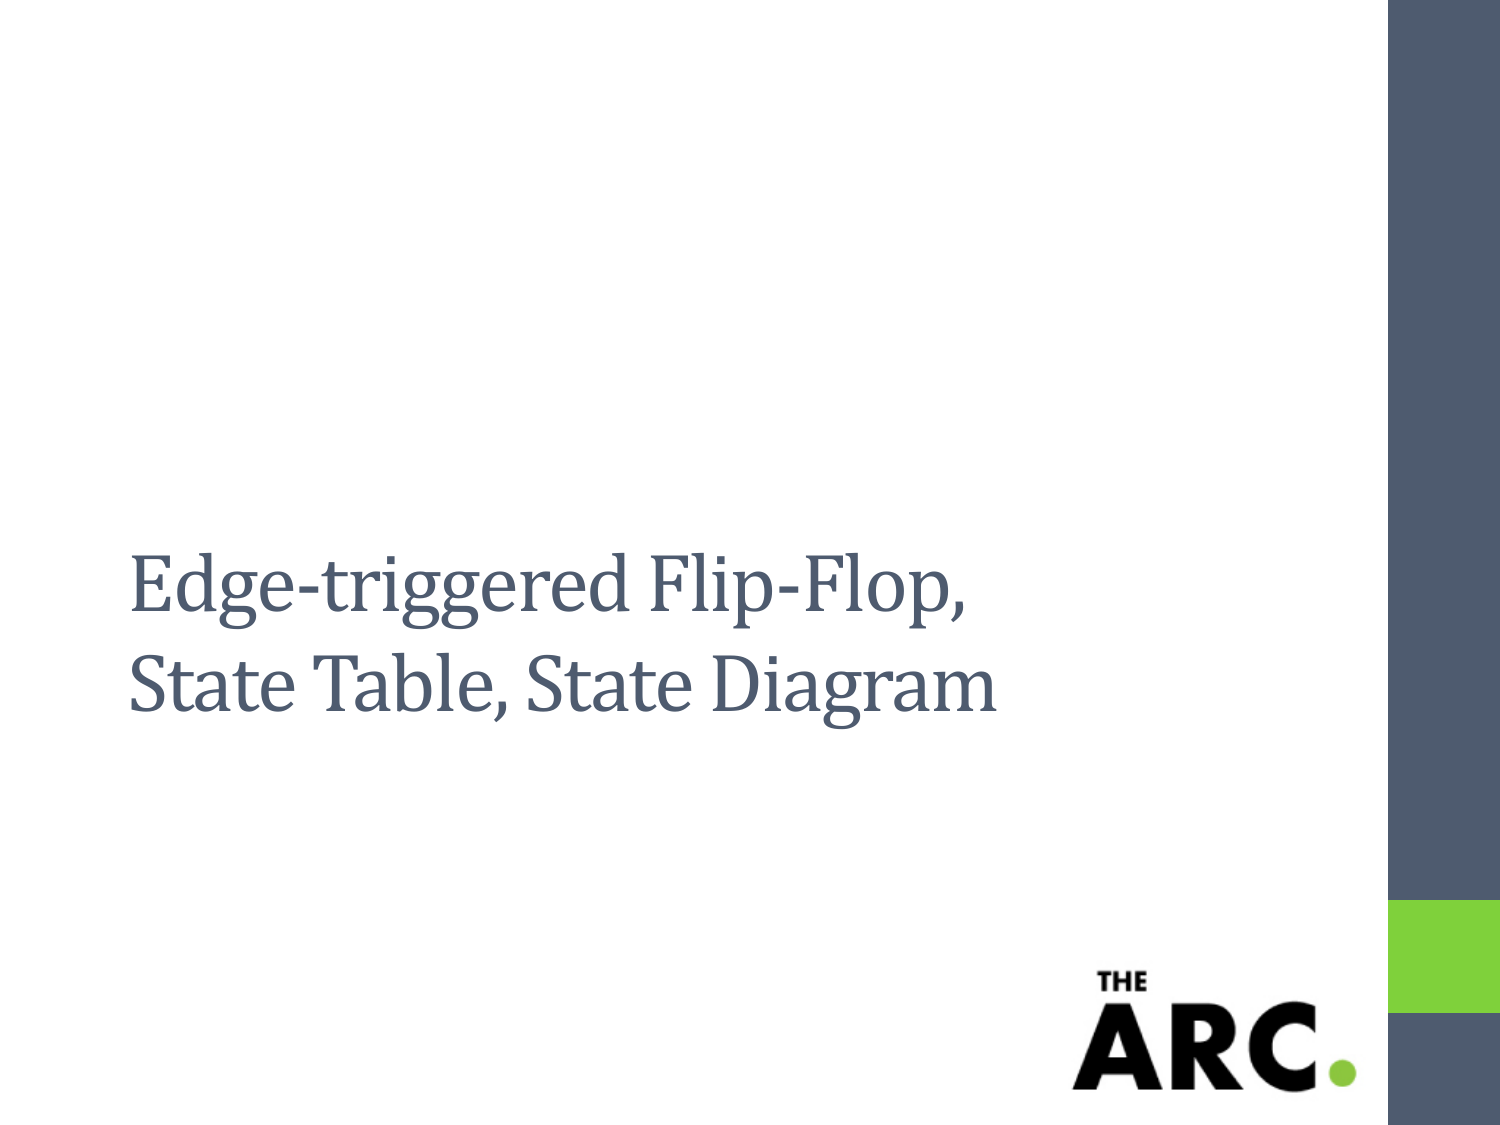 schematic for edge triggered flip flop